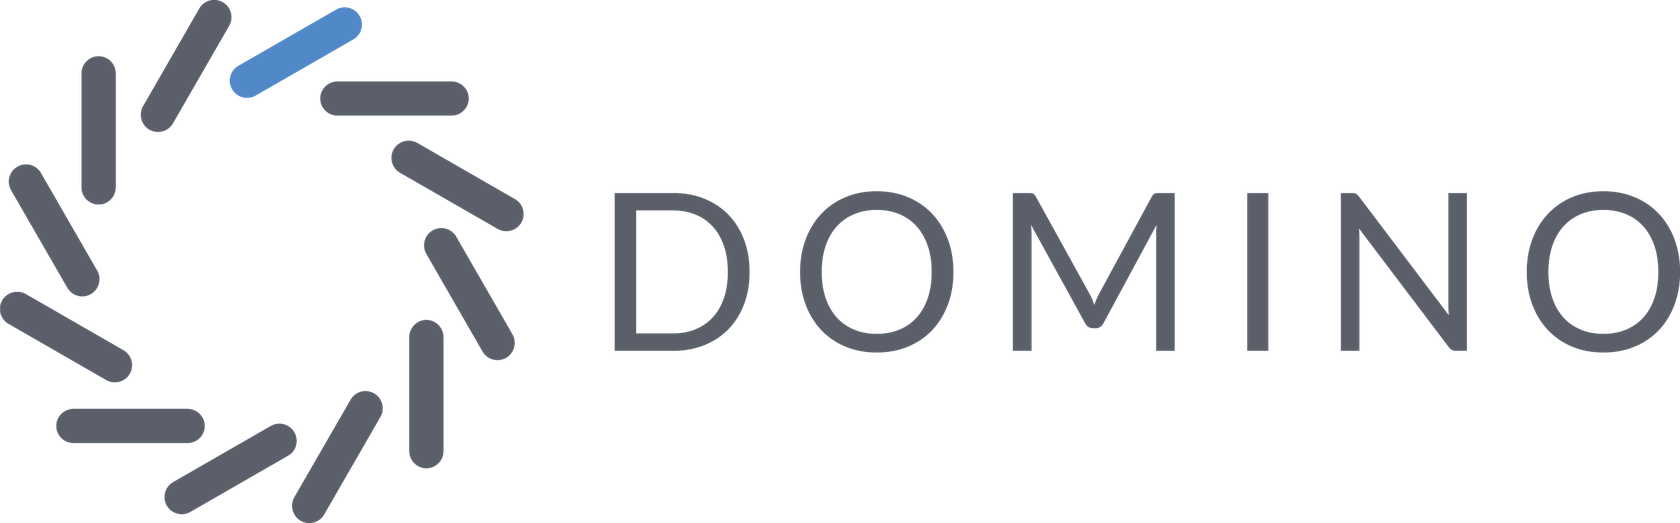 domino logo.png